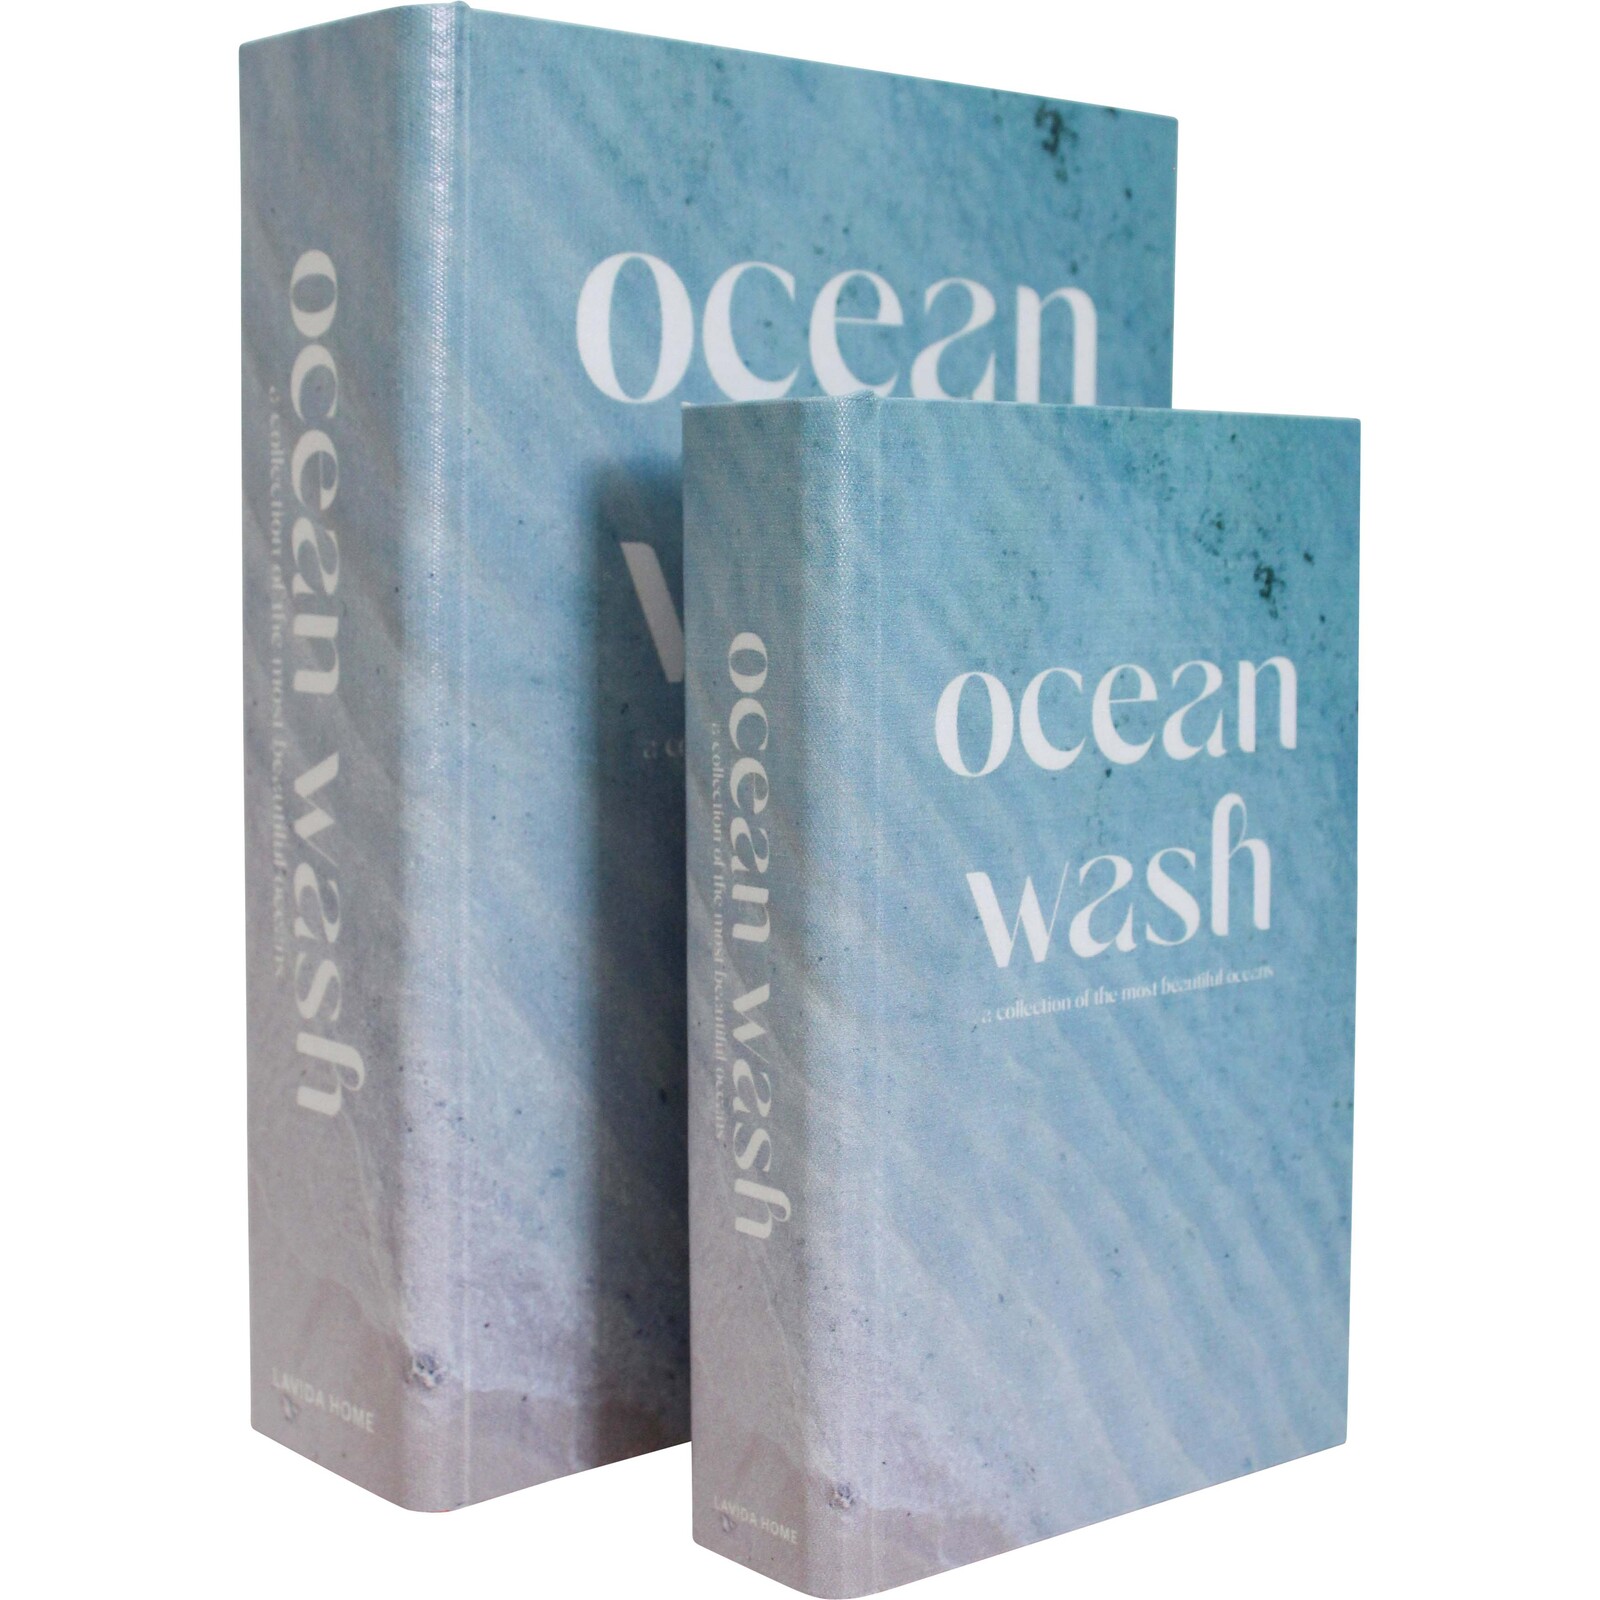 Book Box S/2 Ocean Wash